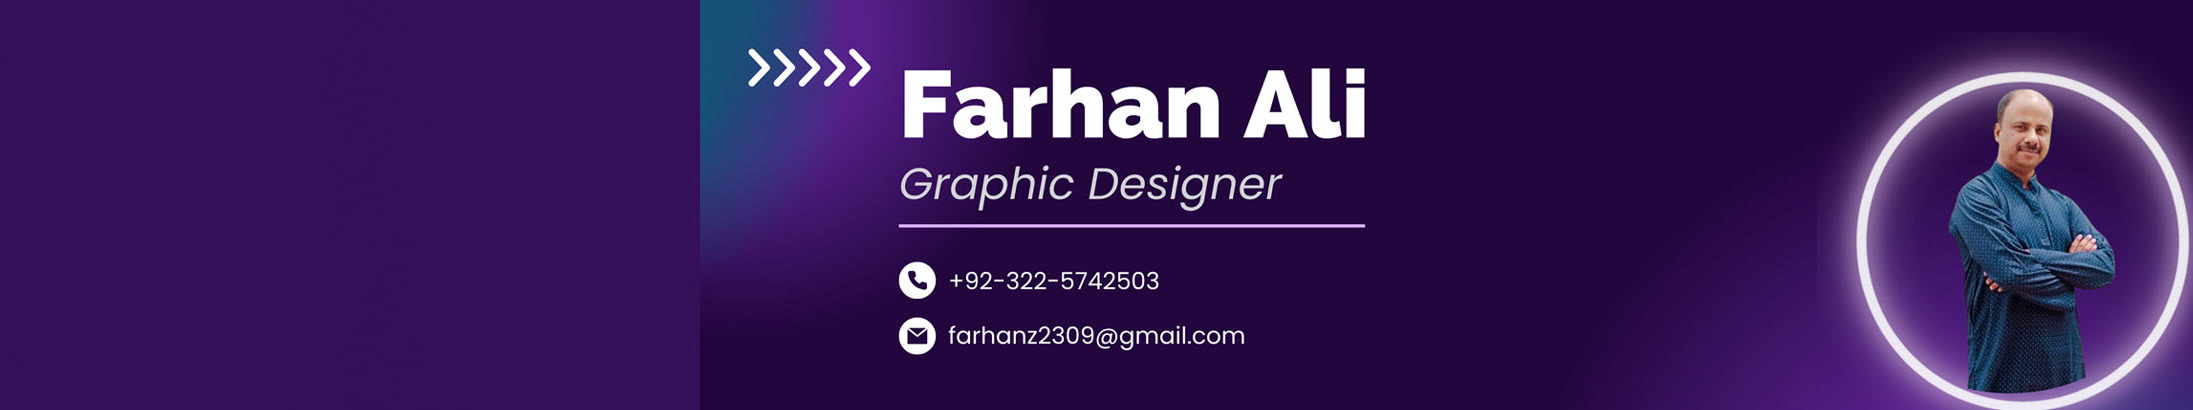 Farhan Ali's profile banner